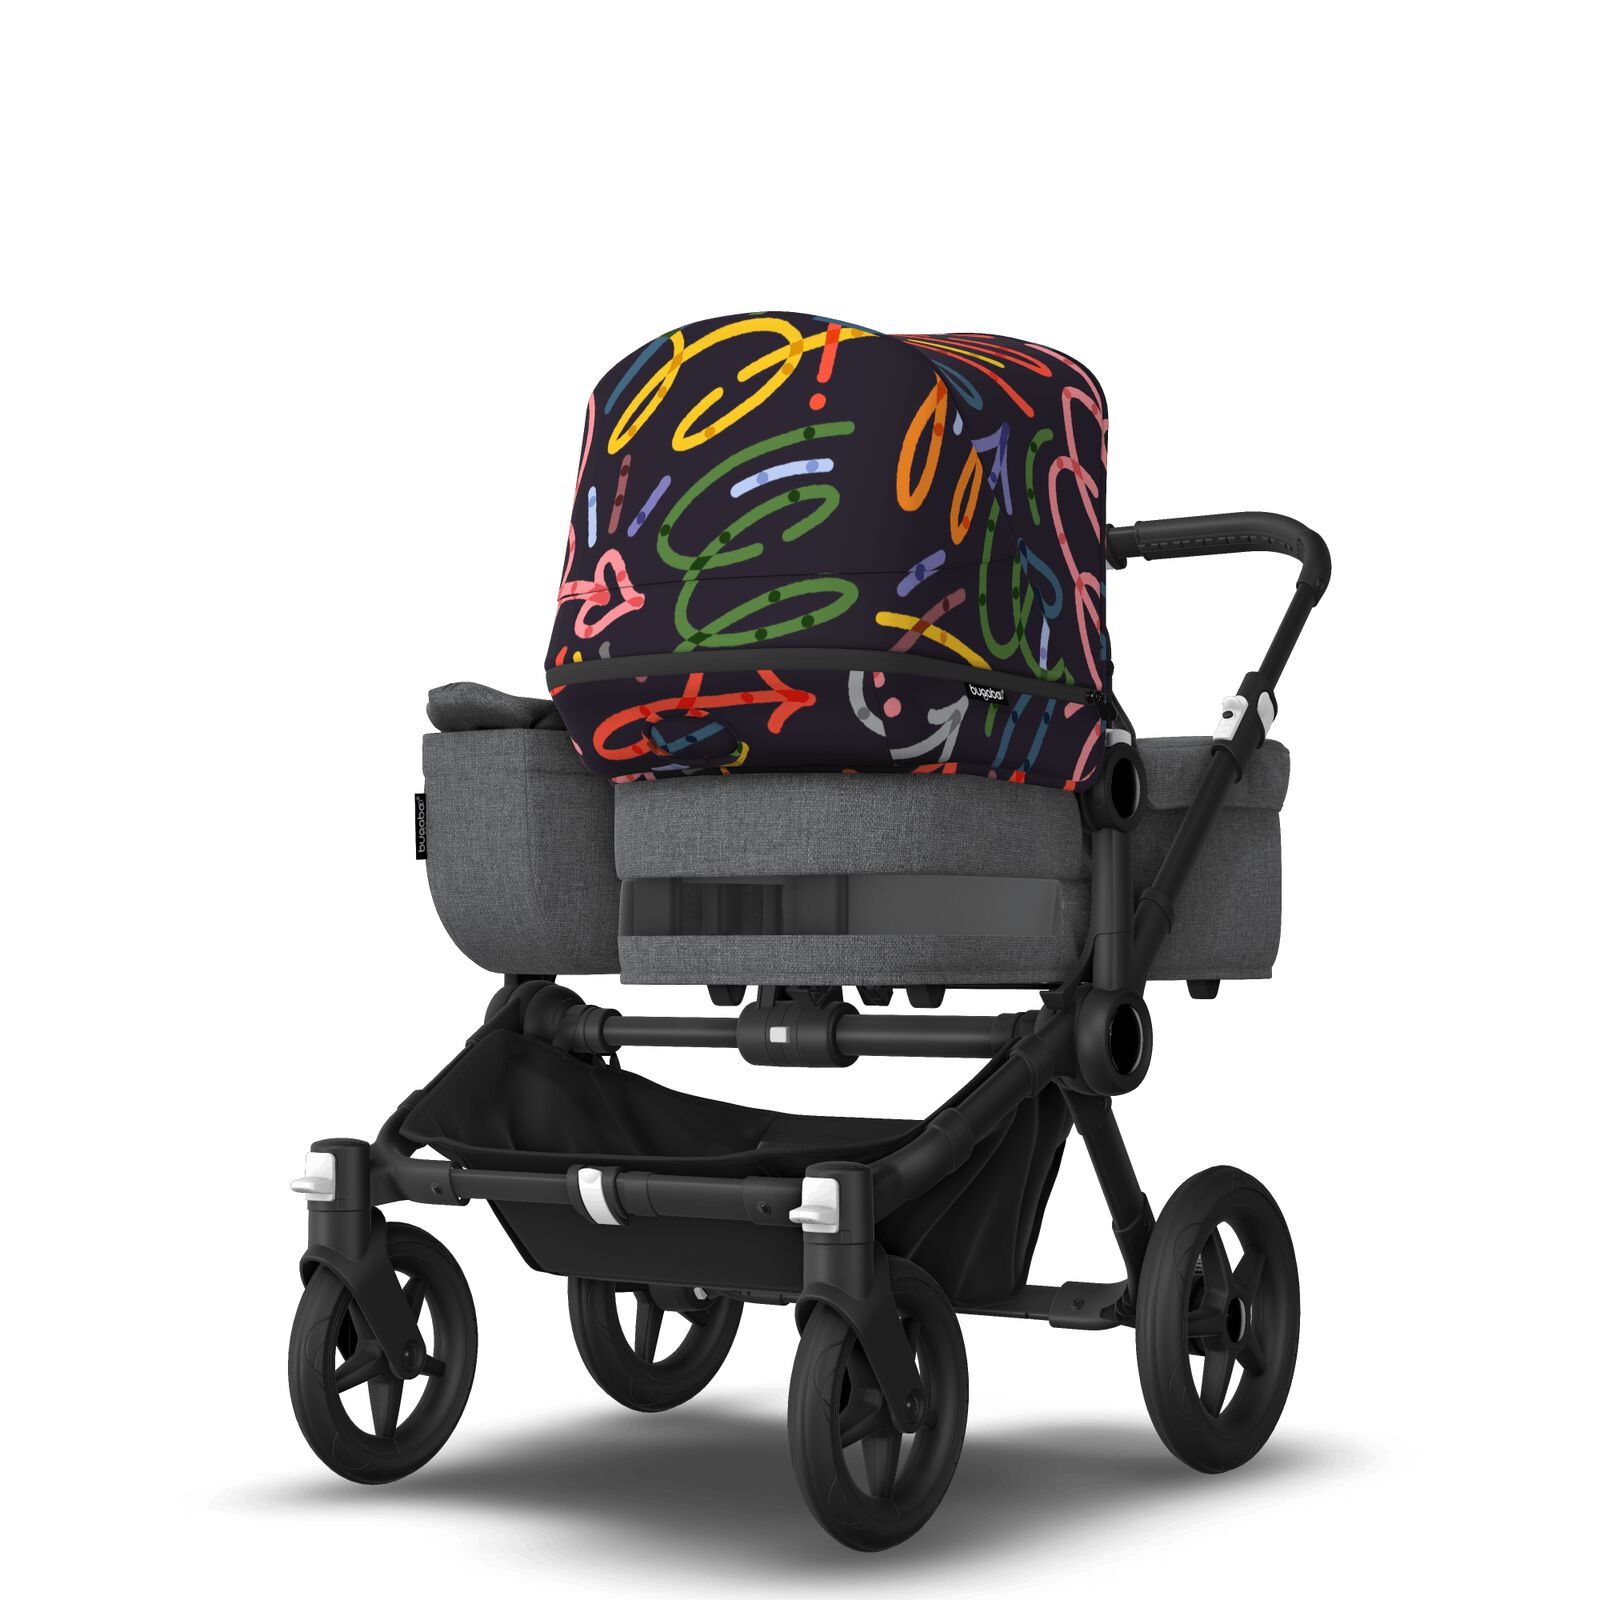 Bugaboo Donkey 5 Mono bassinet and seat stroller black base, grey mélange fabrics, art of discovery dark blue sun canopy